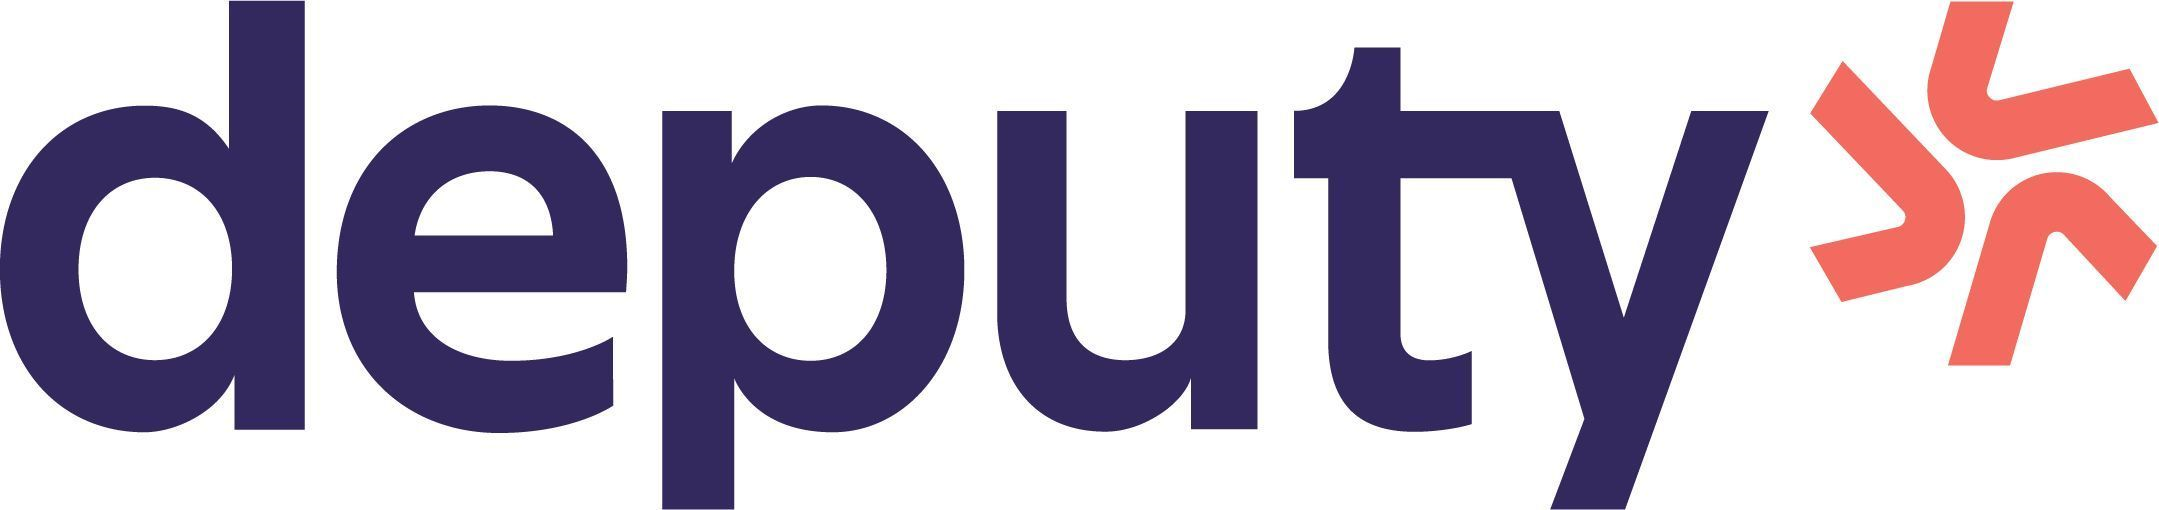 ScottMadden logo